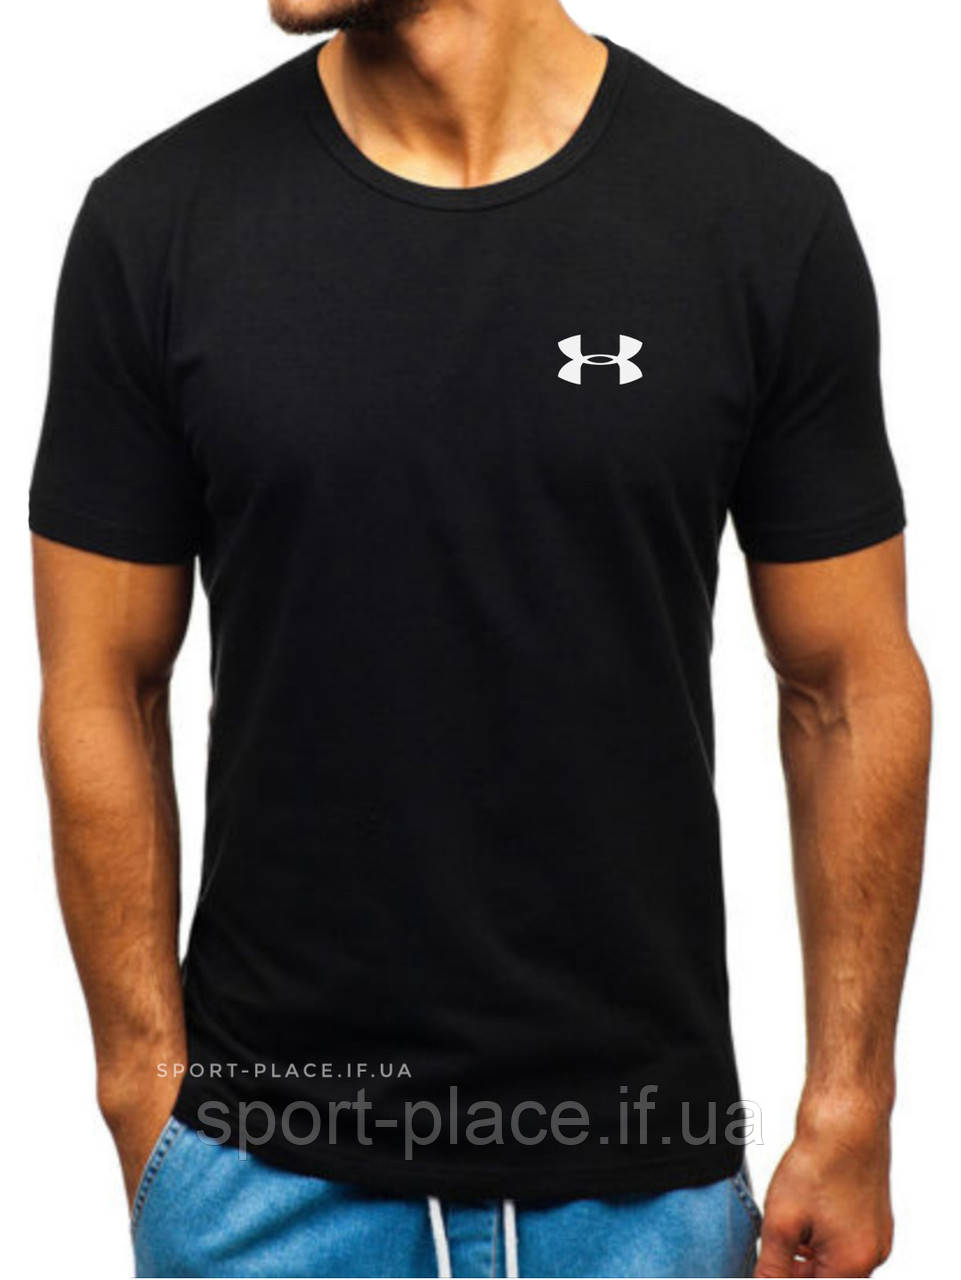 Чоловіча футболка Under Armour (Андер Армор) чорна (маленька емблема) бавовна